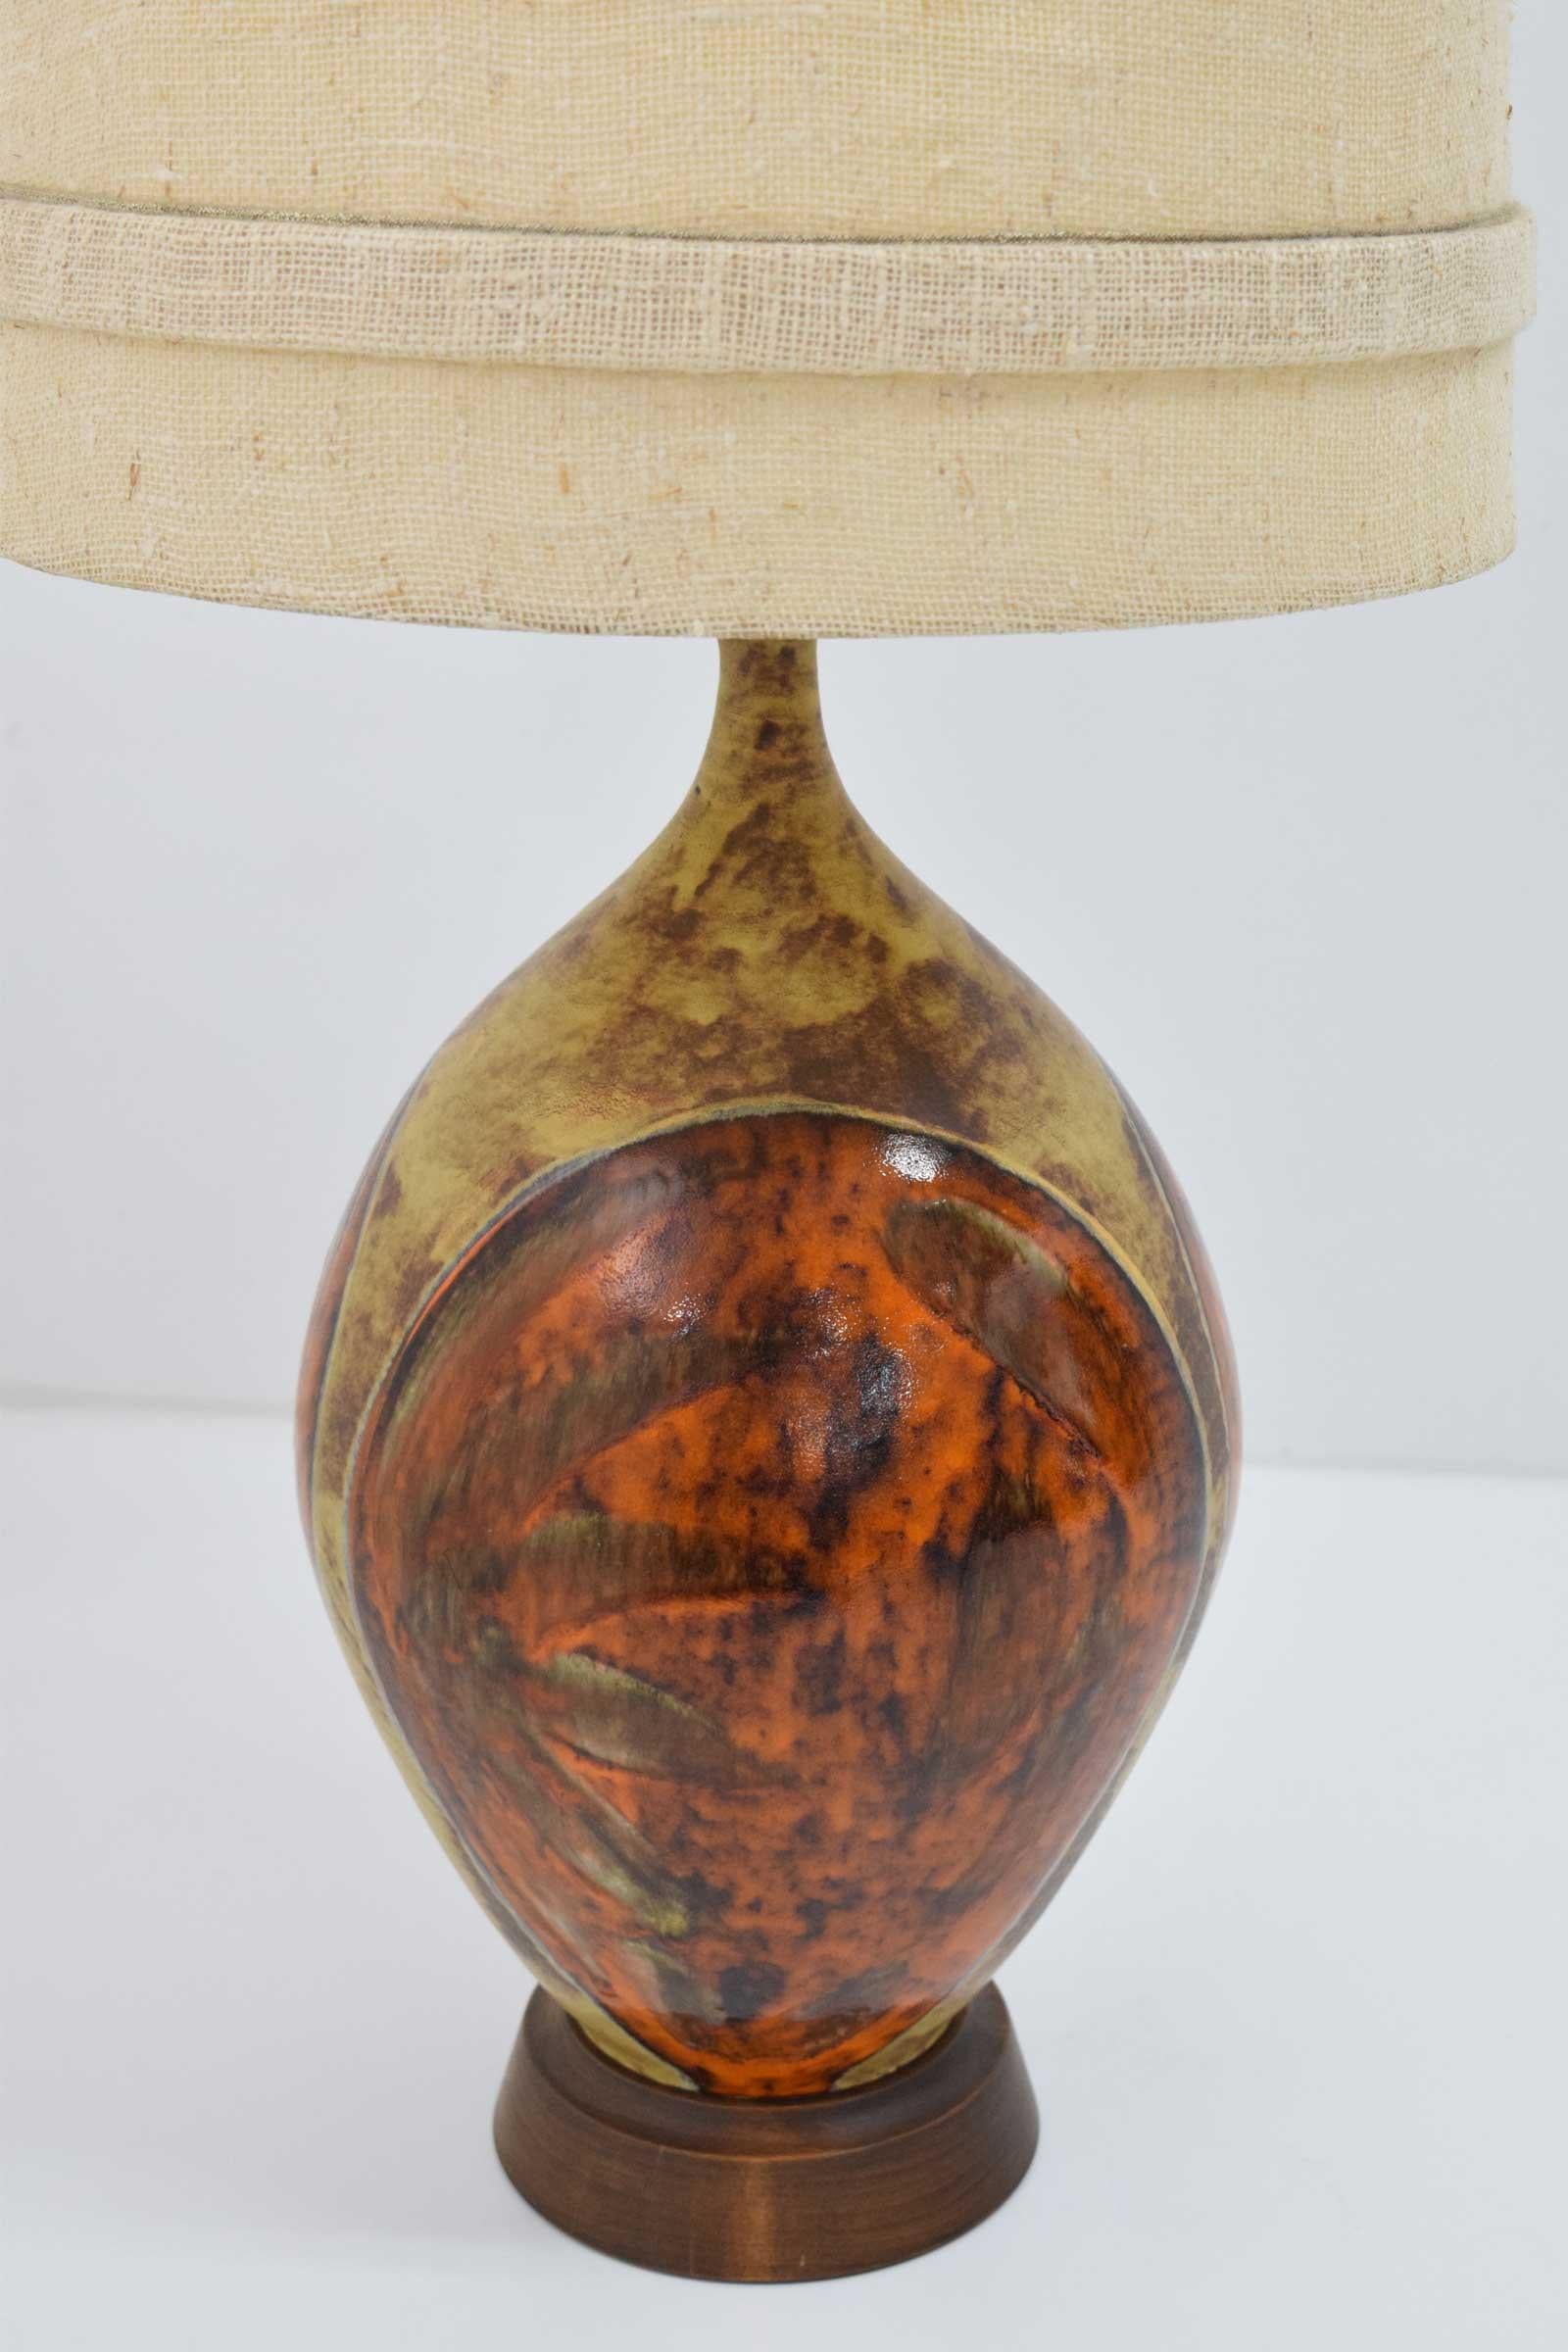 Super nice looking vintage midcentury table lamps. Nice design in orange and brown glazed ceramic. Measurement is to top of harp and diameter is shade diameter.